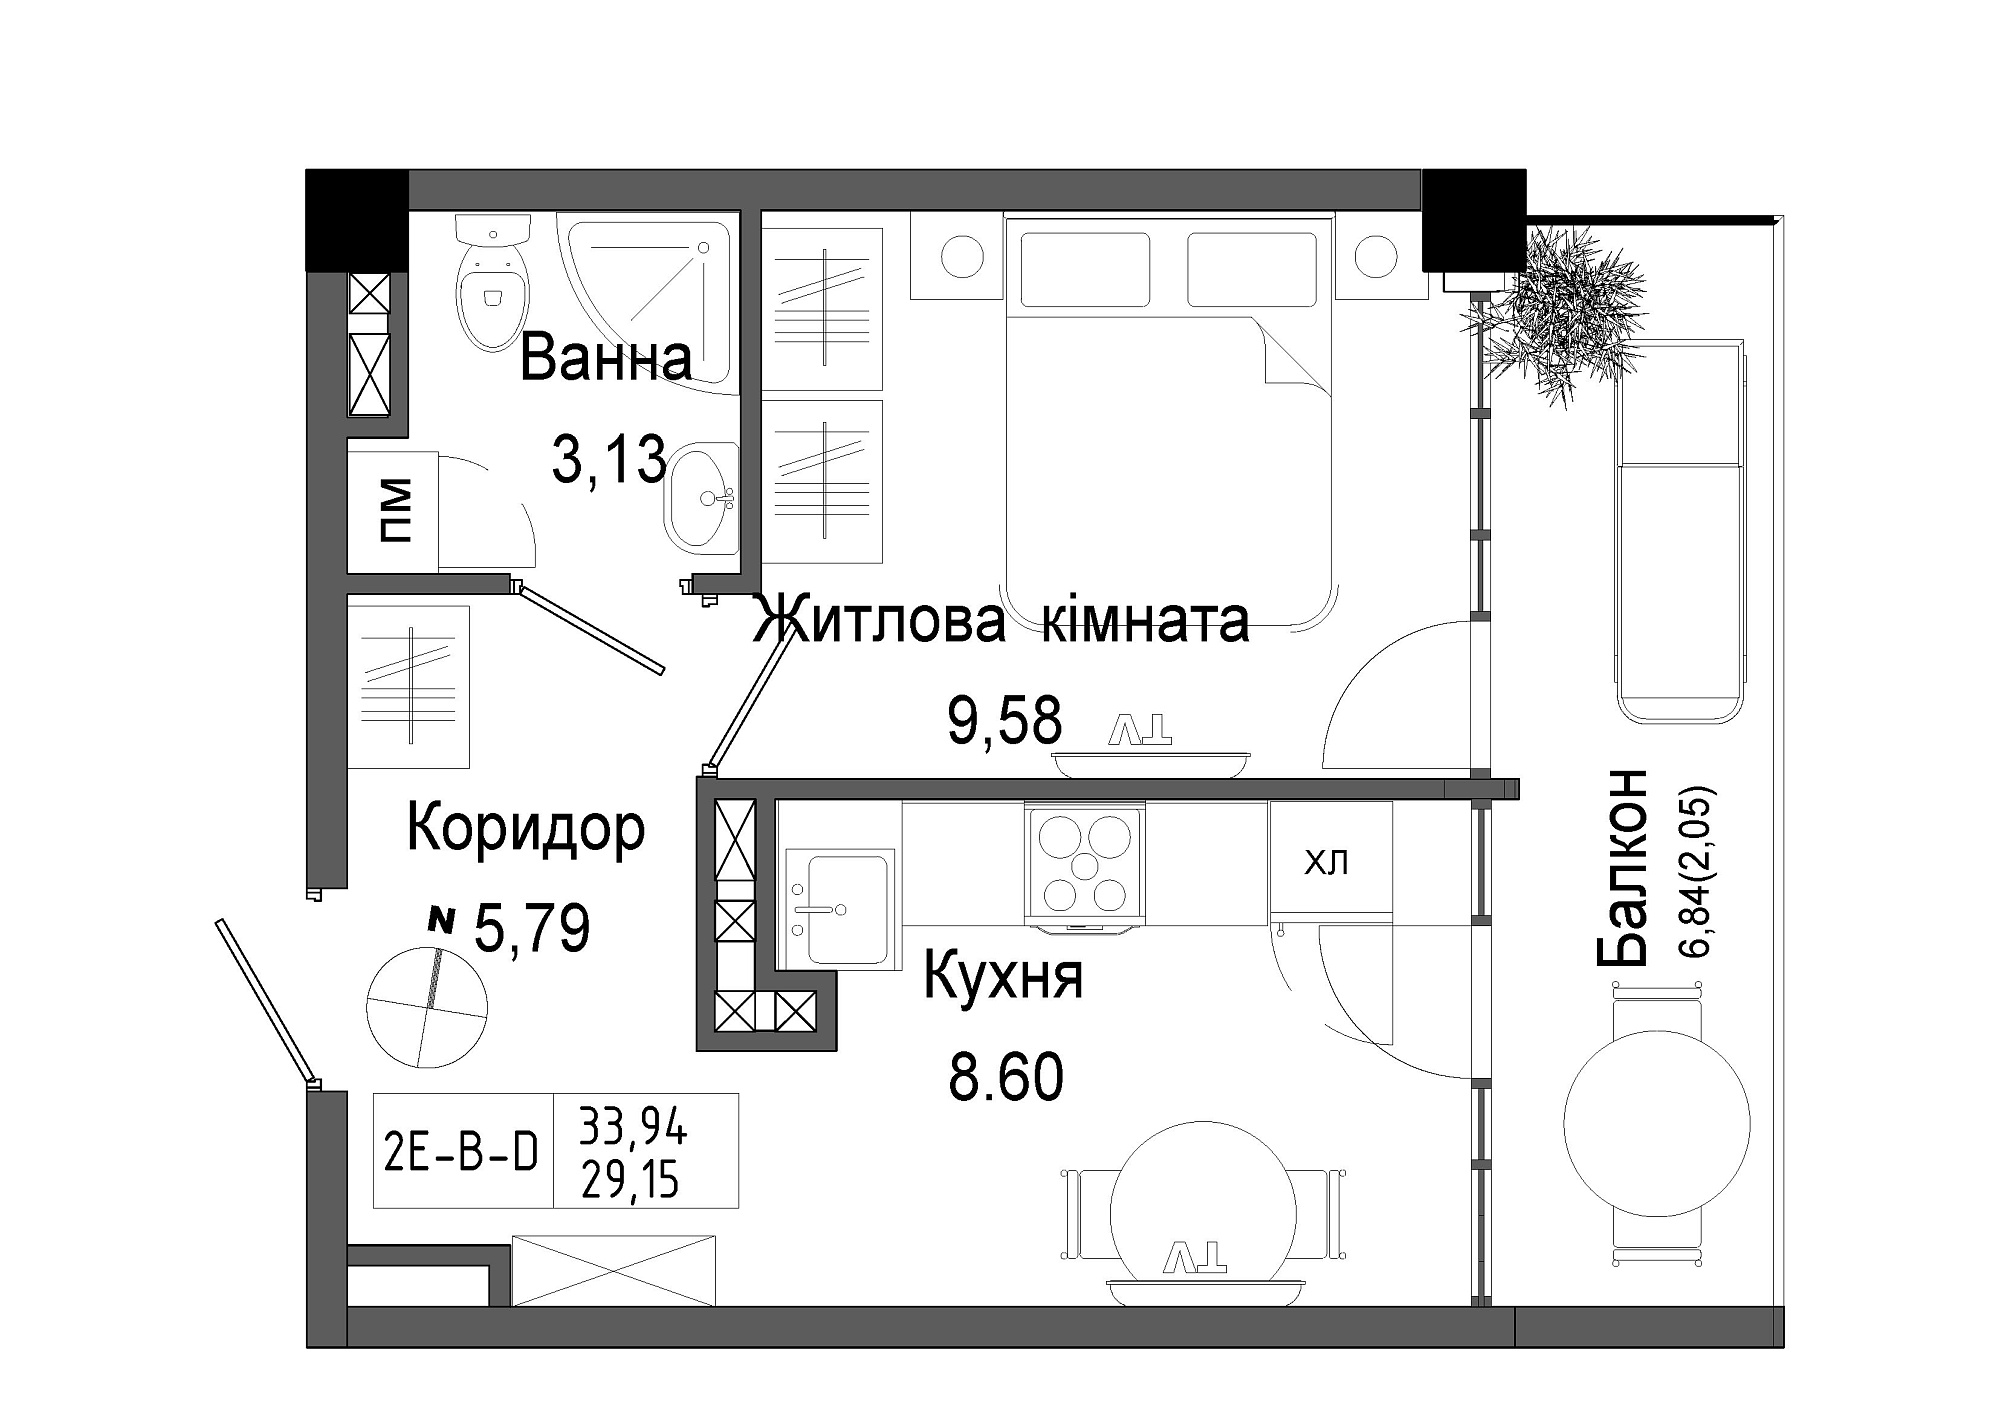 Планування 1-к квартира площею 29.15м2, UM-006-08/0003.